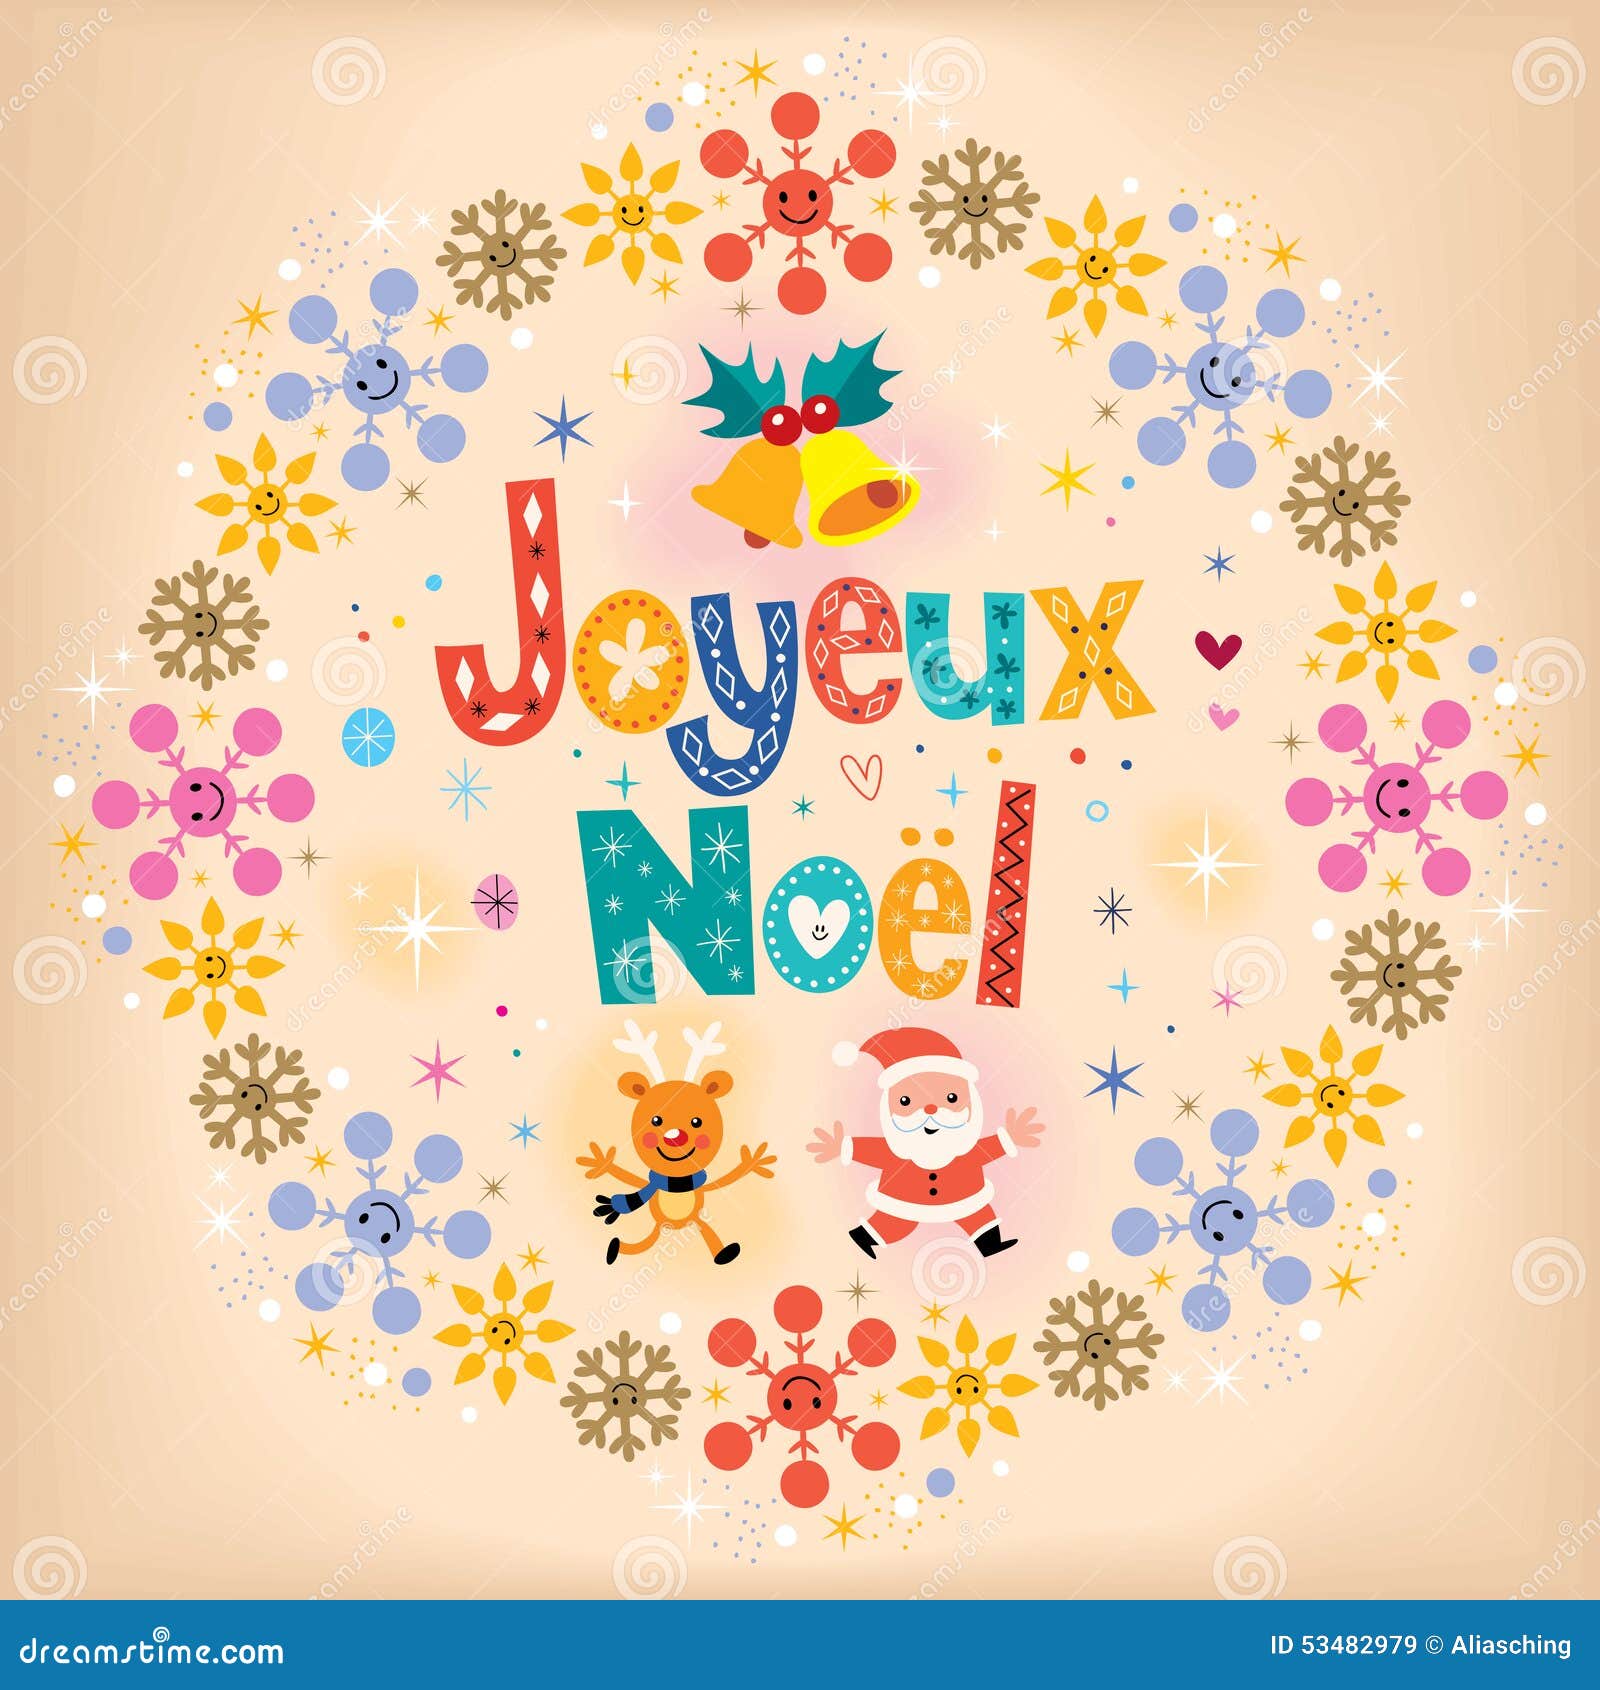 Joyeux Noel - Merry Christmas in French card